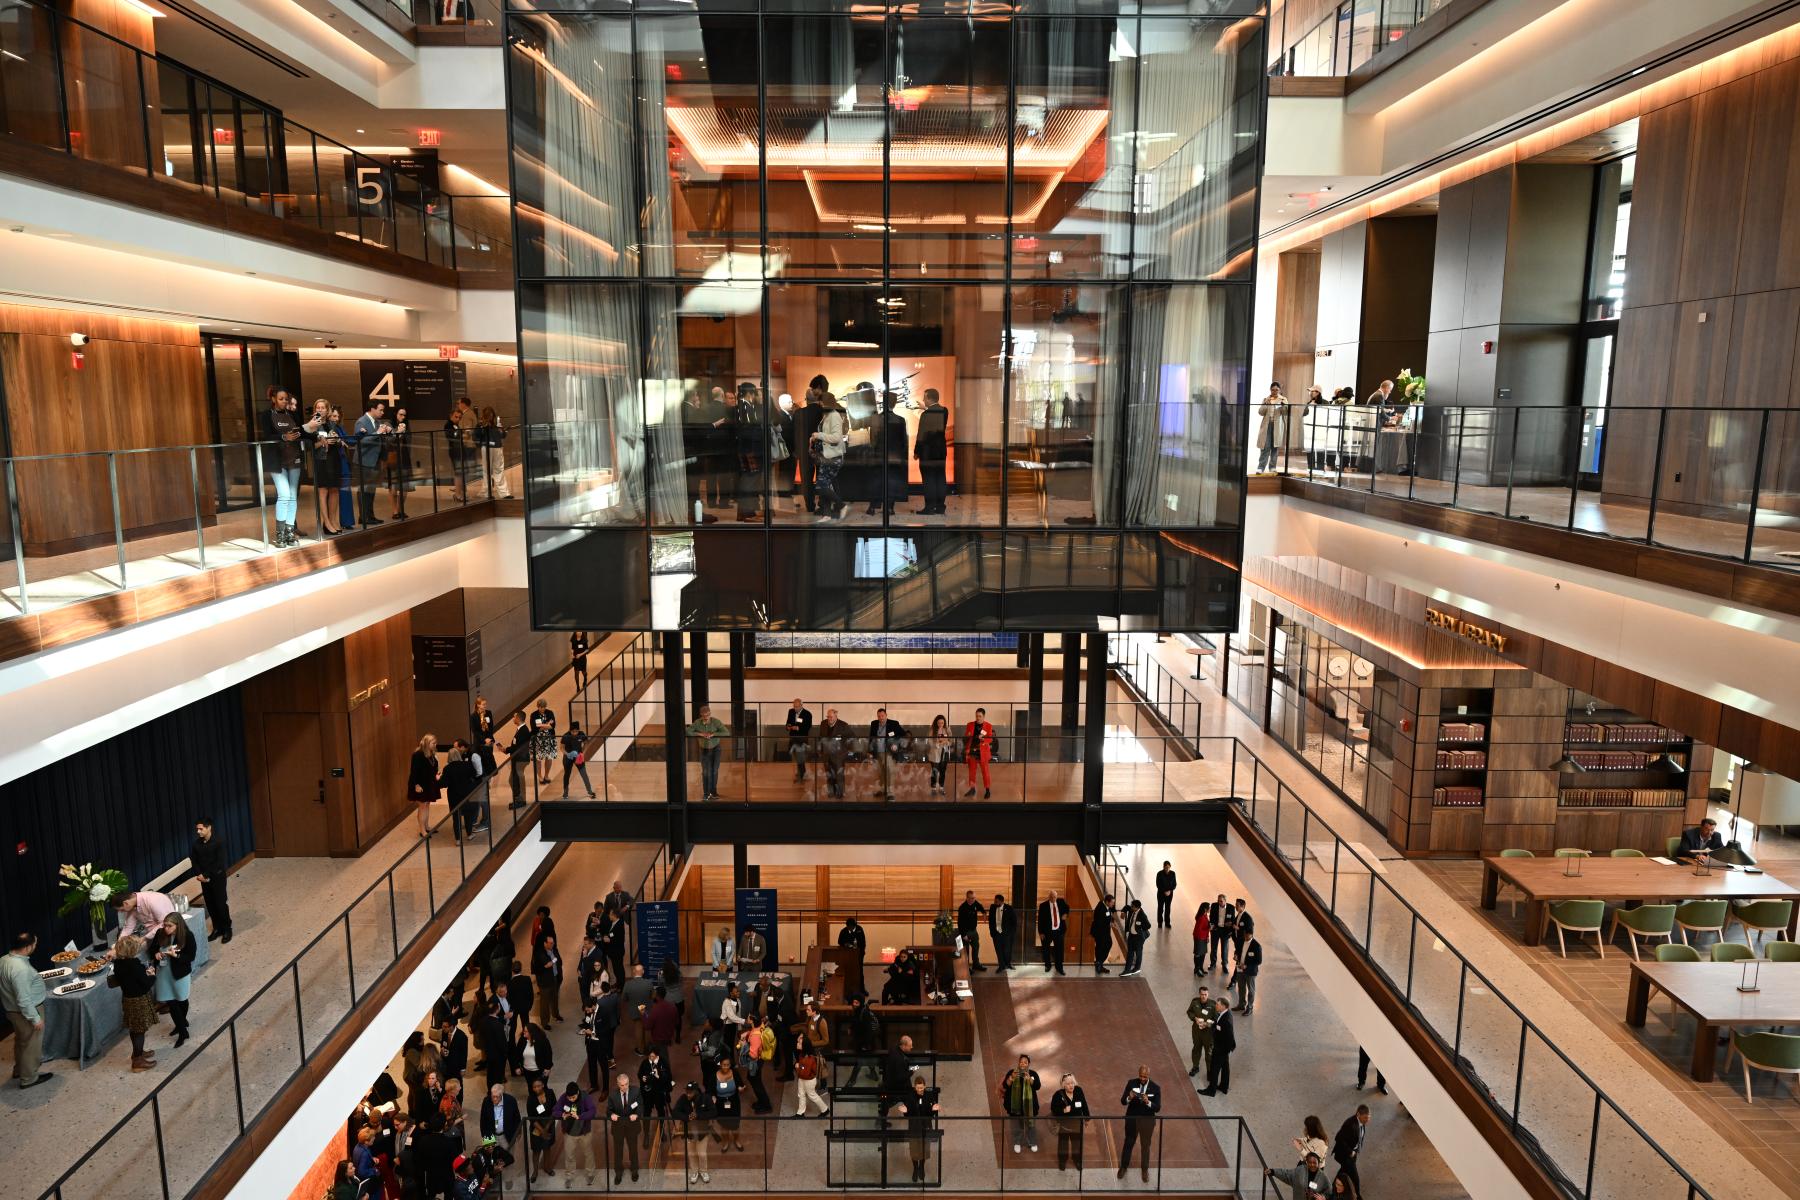 Video: Step inside the new Hopkins Bloomberg Center